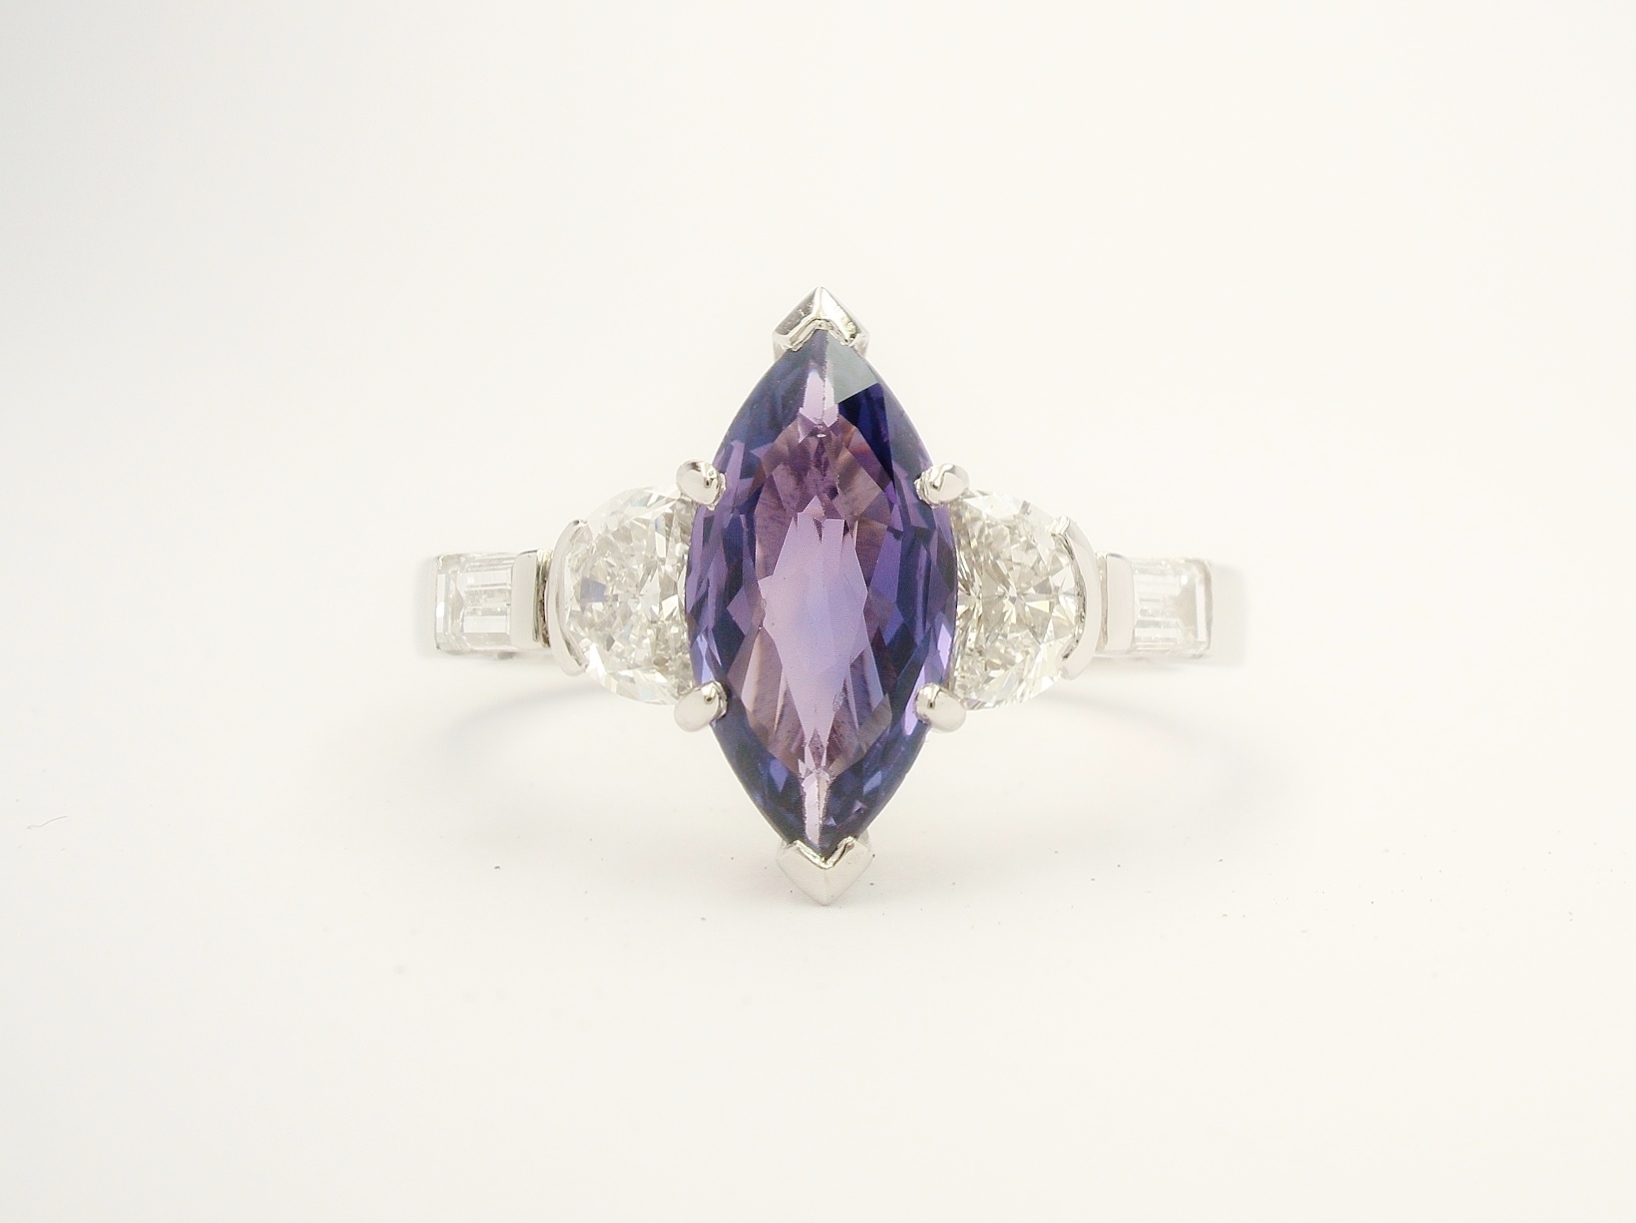 Purple Marquise cut sapphire, half moon cut diamond & baguette diamond 5 stone ring mounted in platinum.